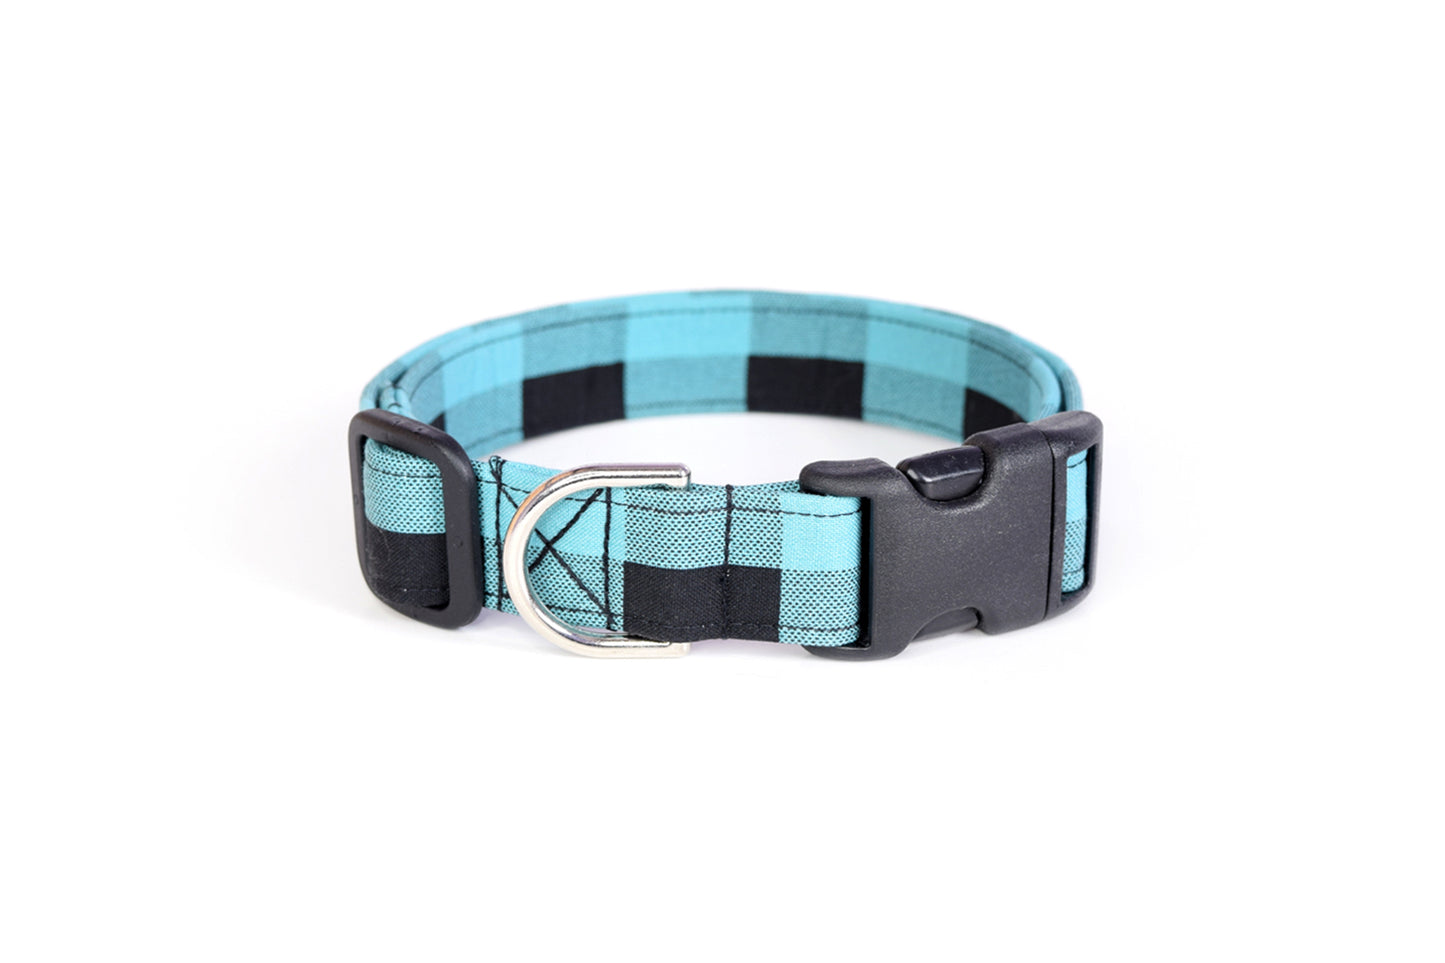 Teal Blue & Black Buffalo Plaid Dog Collar - Handmade by Kira's Pet Shop